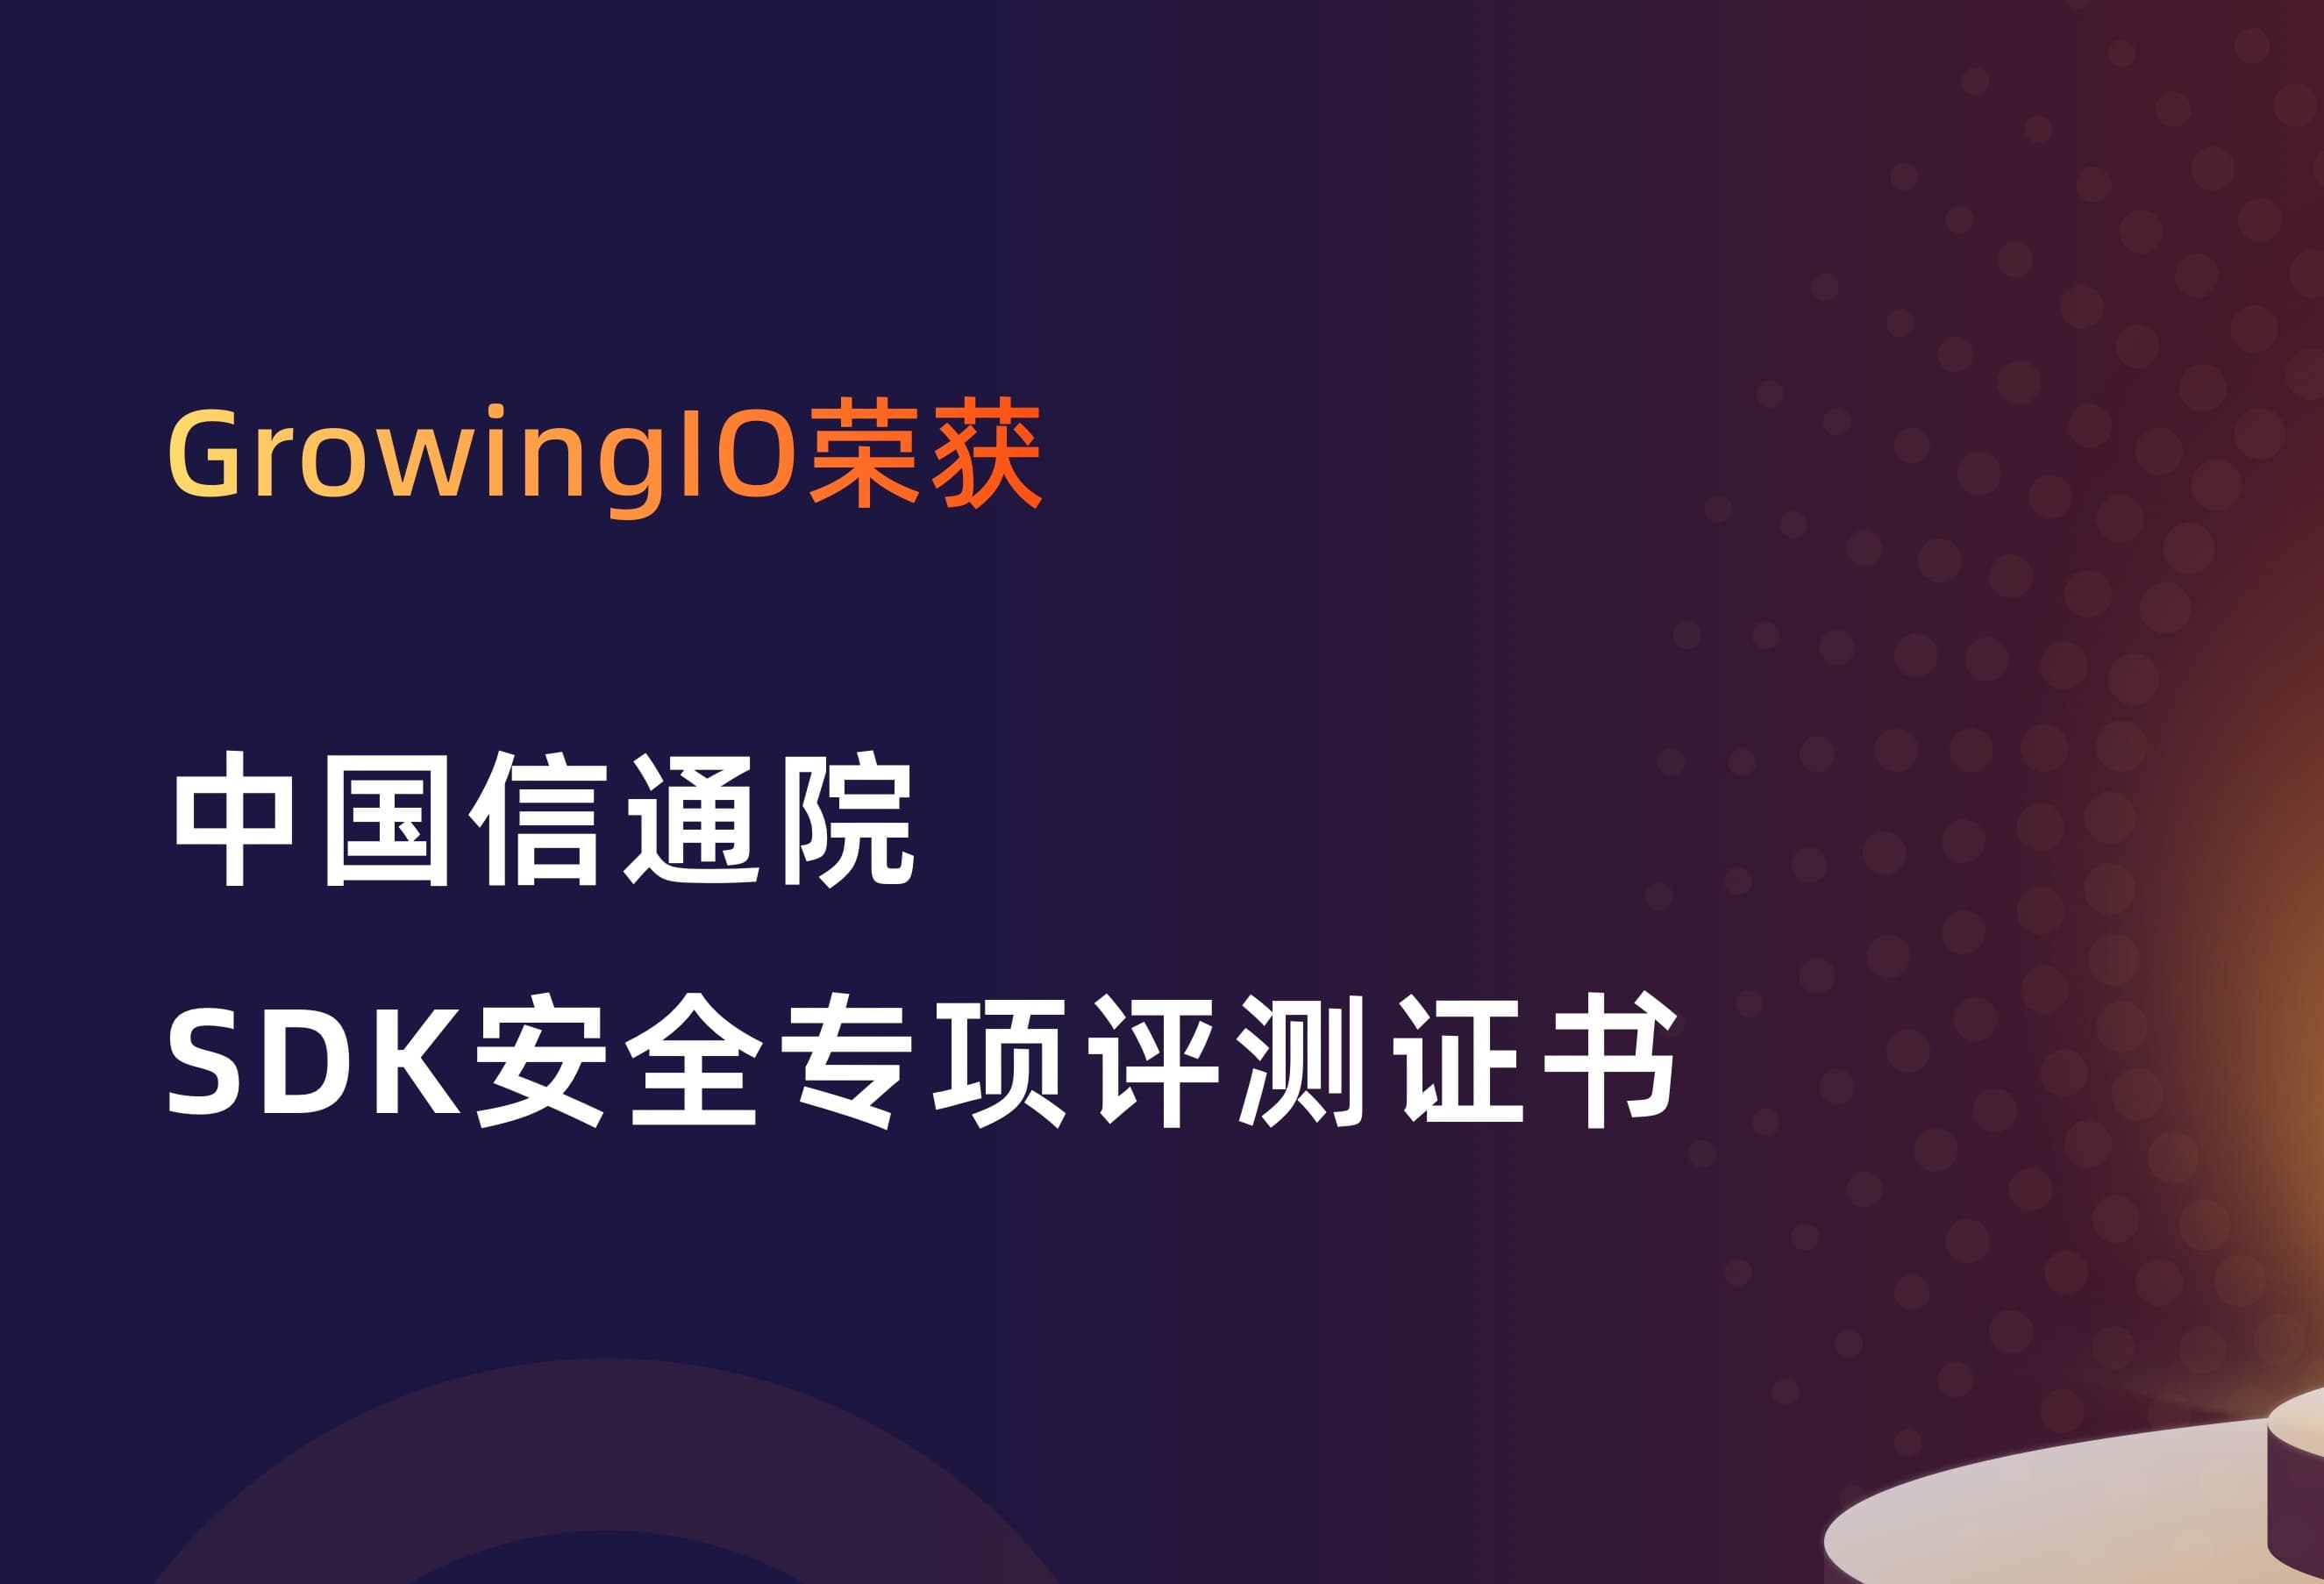 GrowingIO 荣获中国信通院 SDK 安全专项评测证书